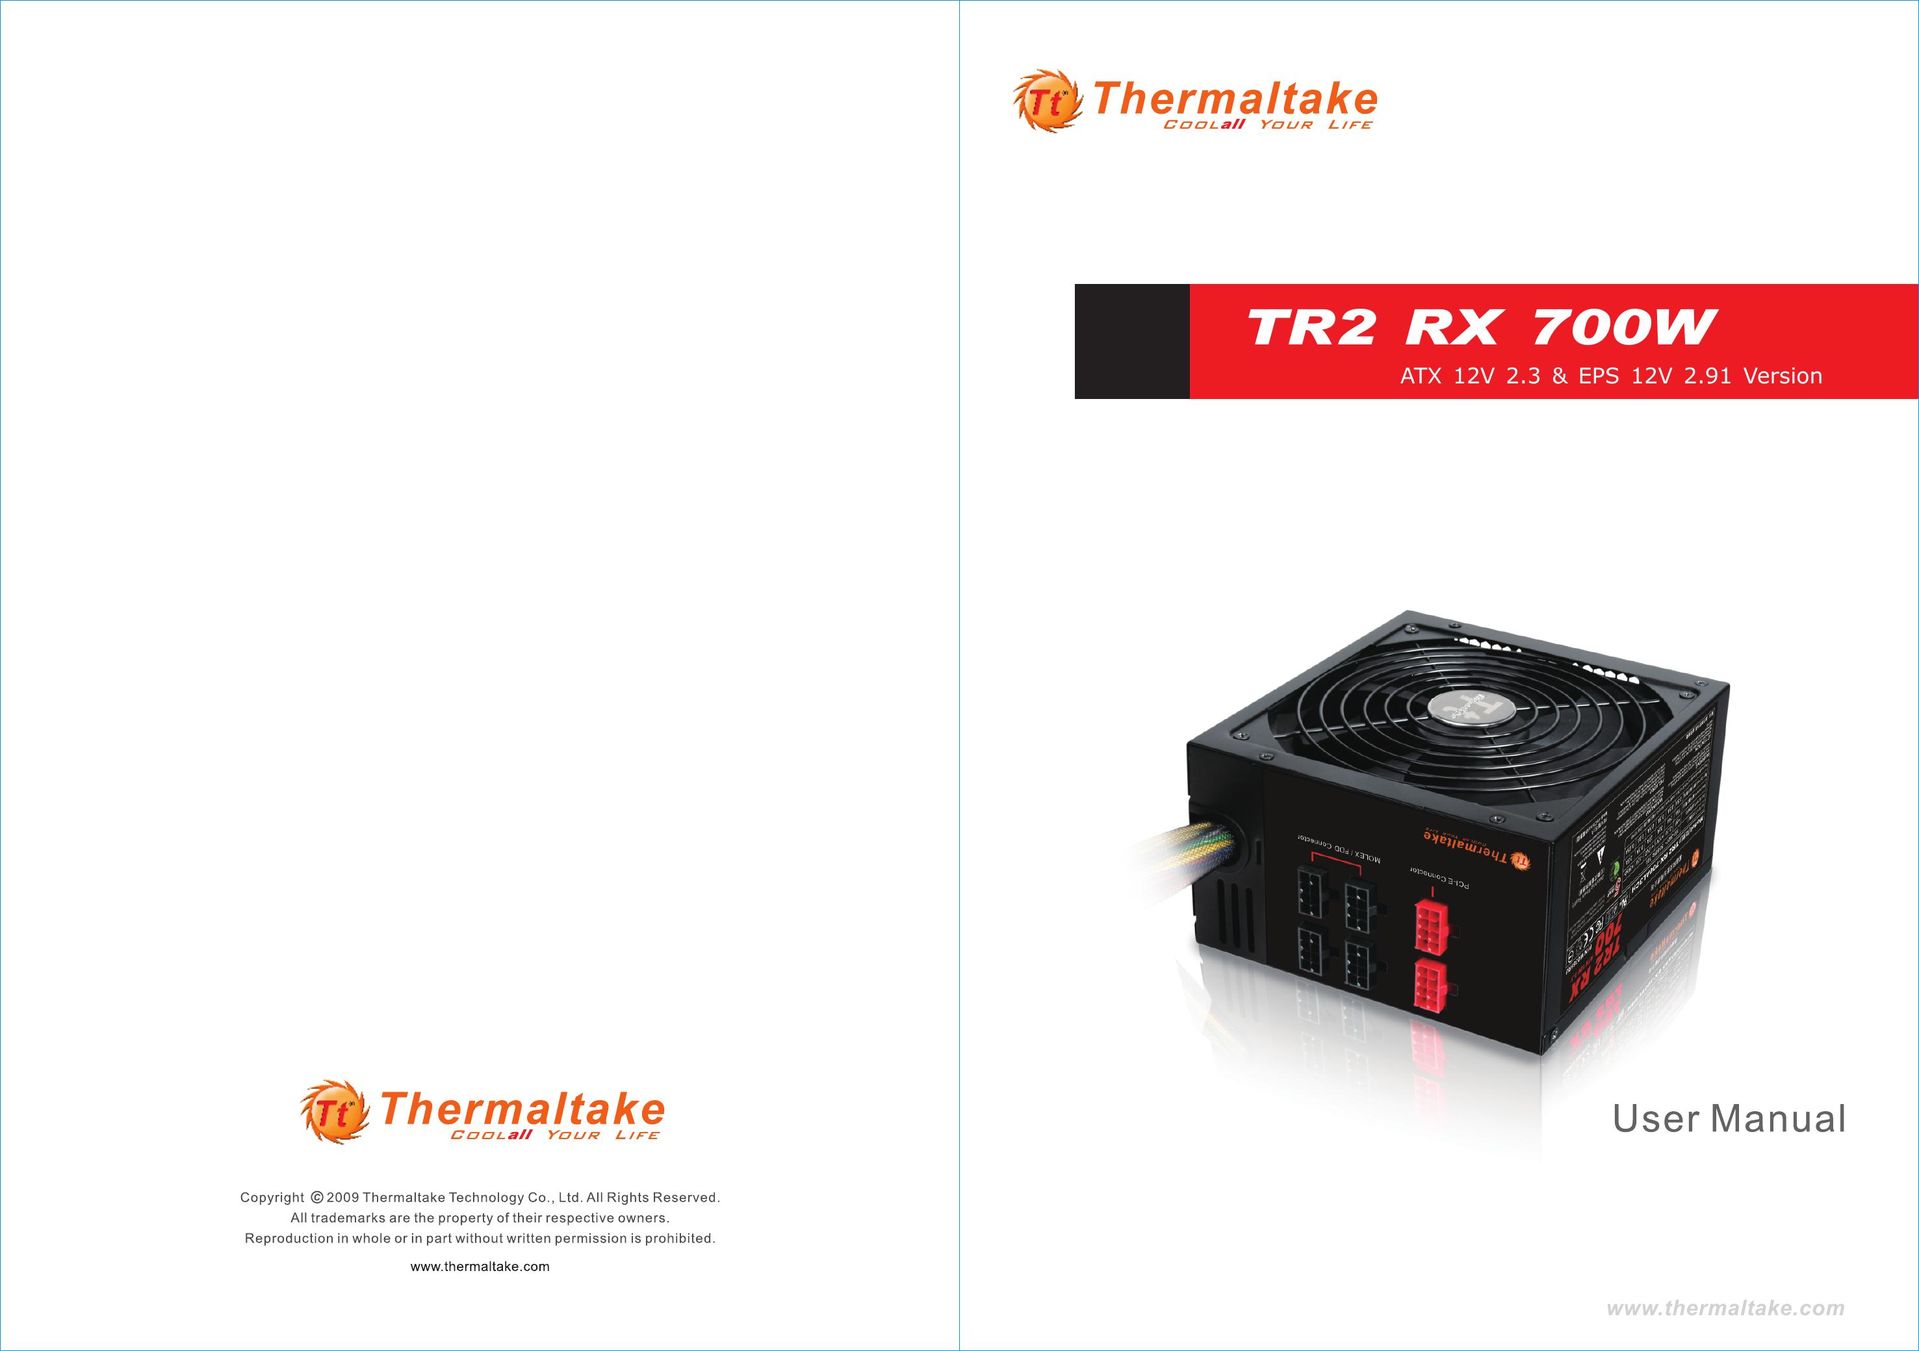 Thermaltake W0366RU Power Supply User Manual